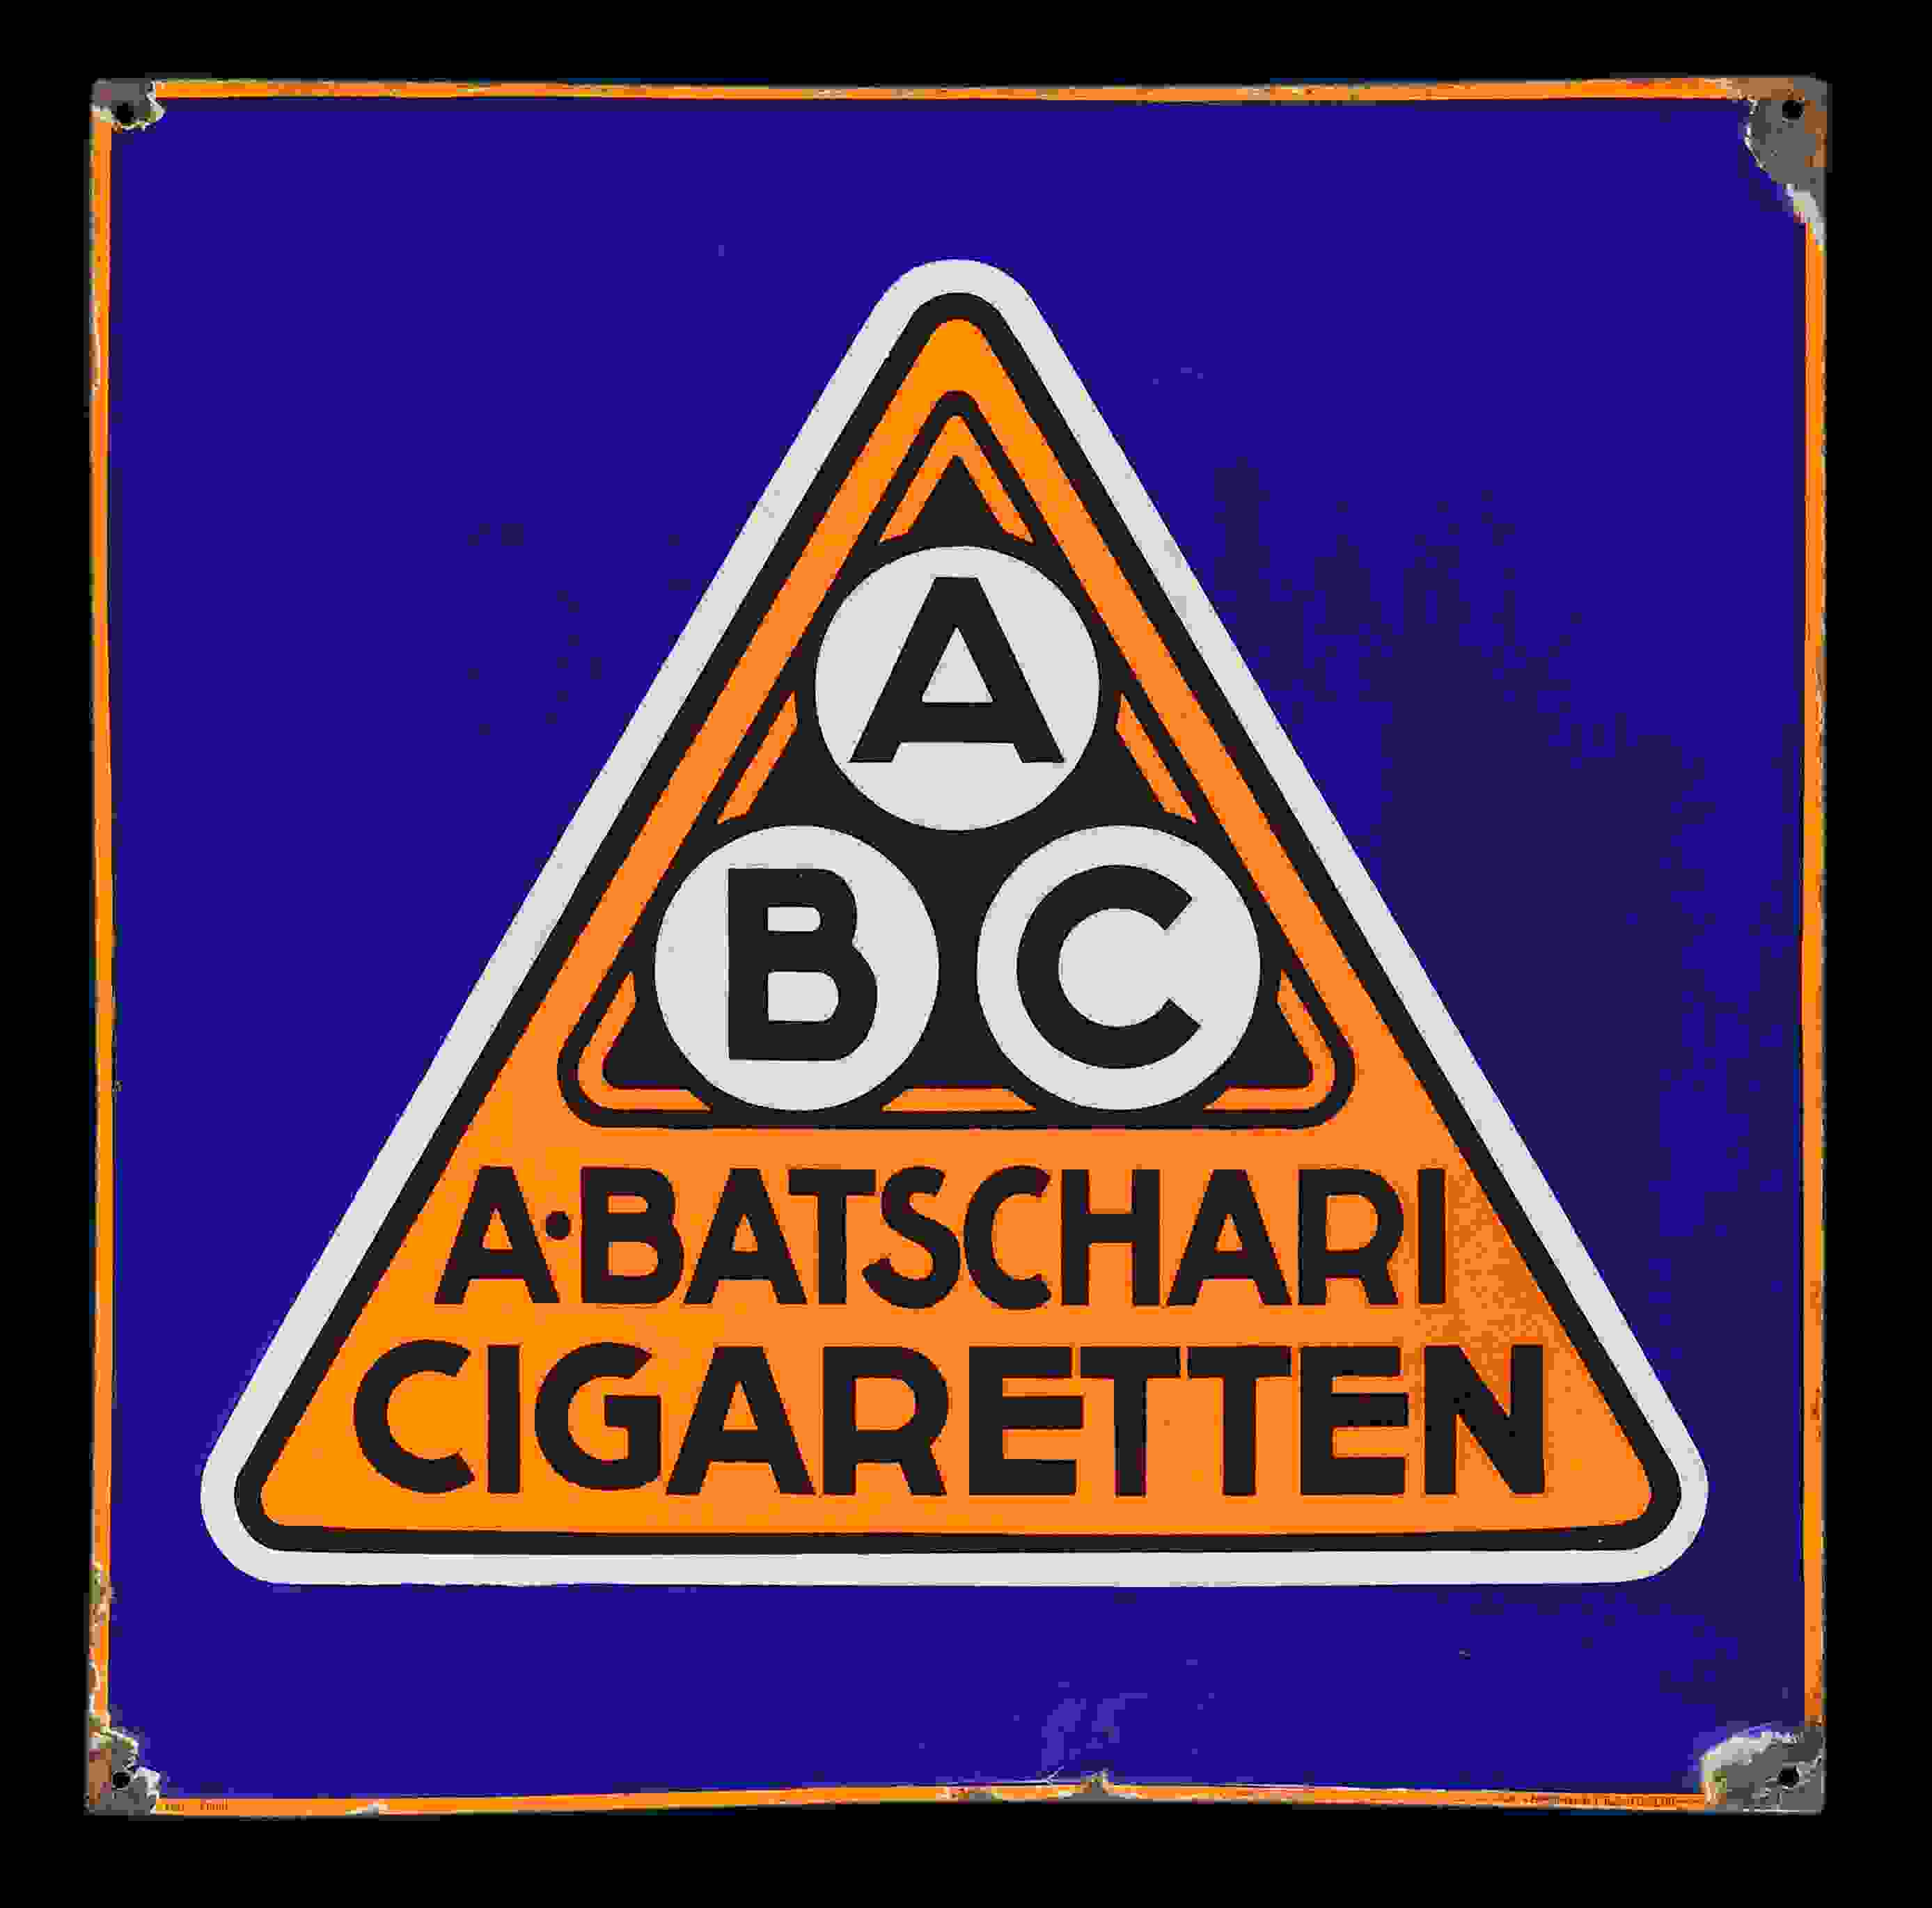 ABC A. Batschari Cigaretten 